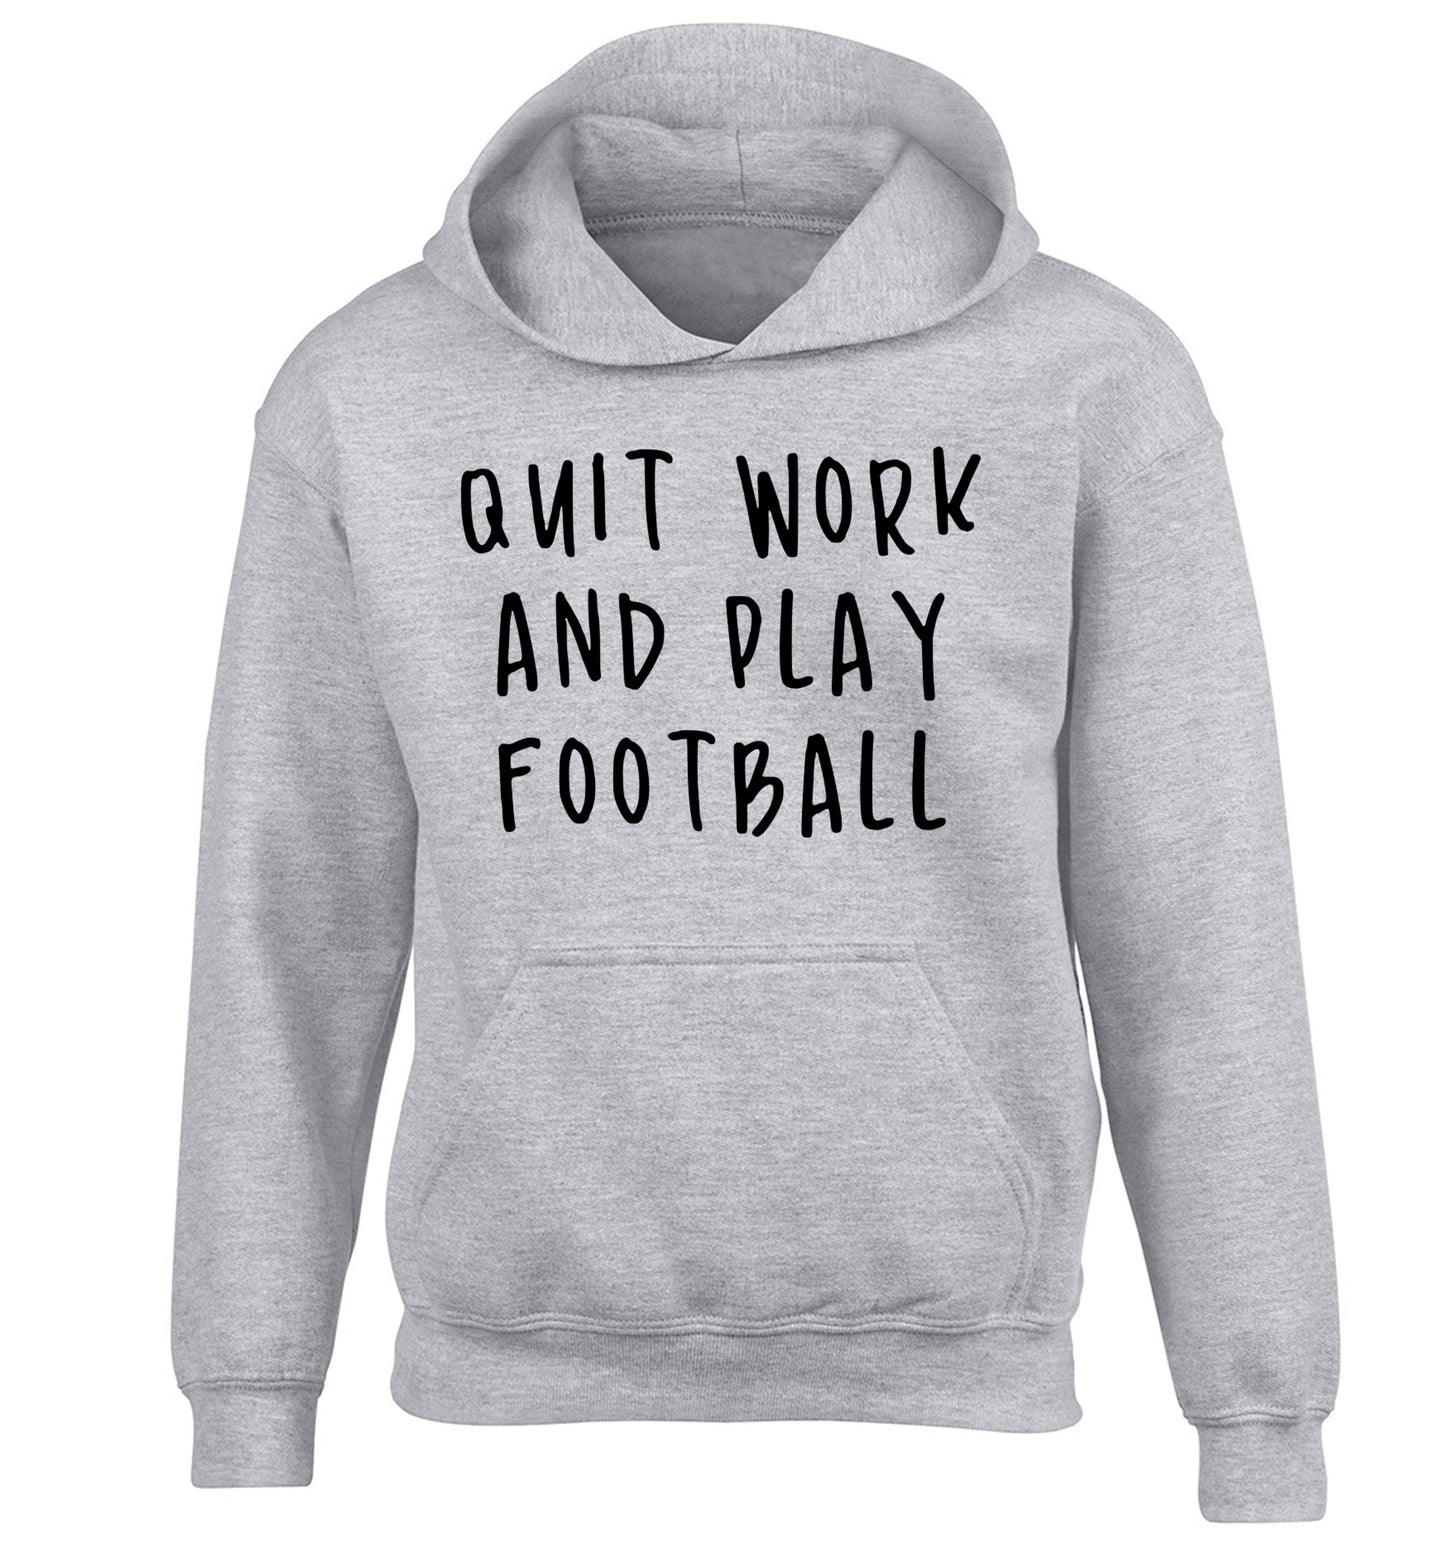 Quit work play football children's grey hoodie 12-14 Years